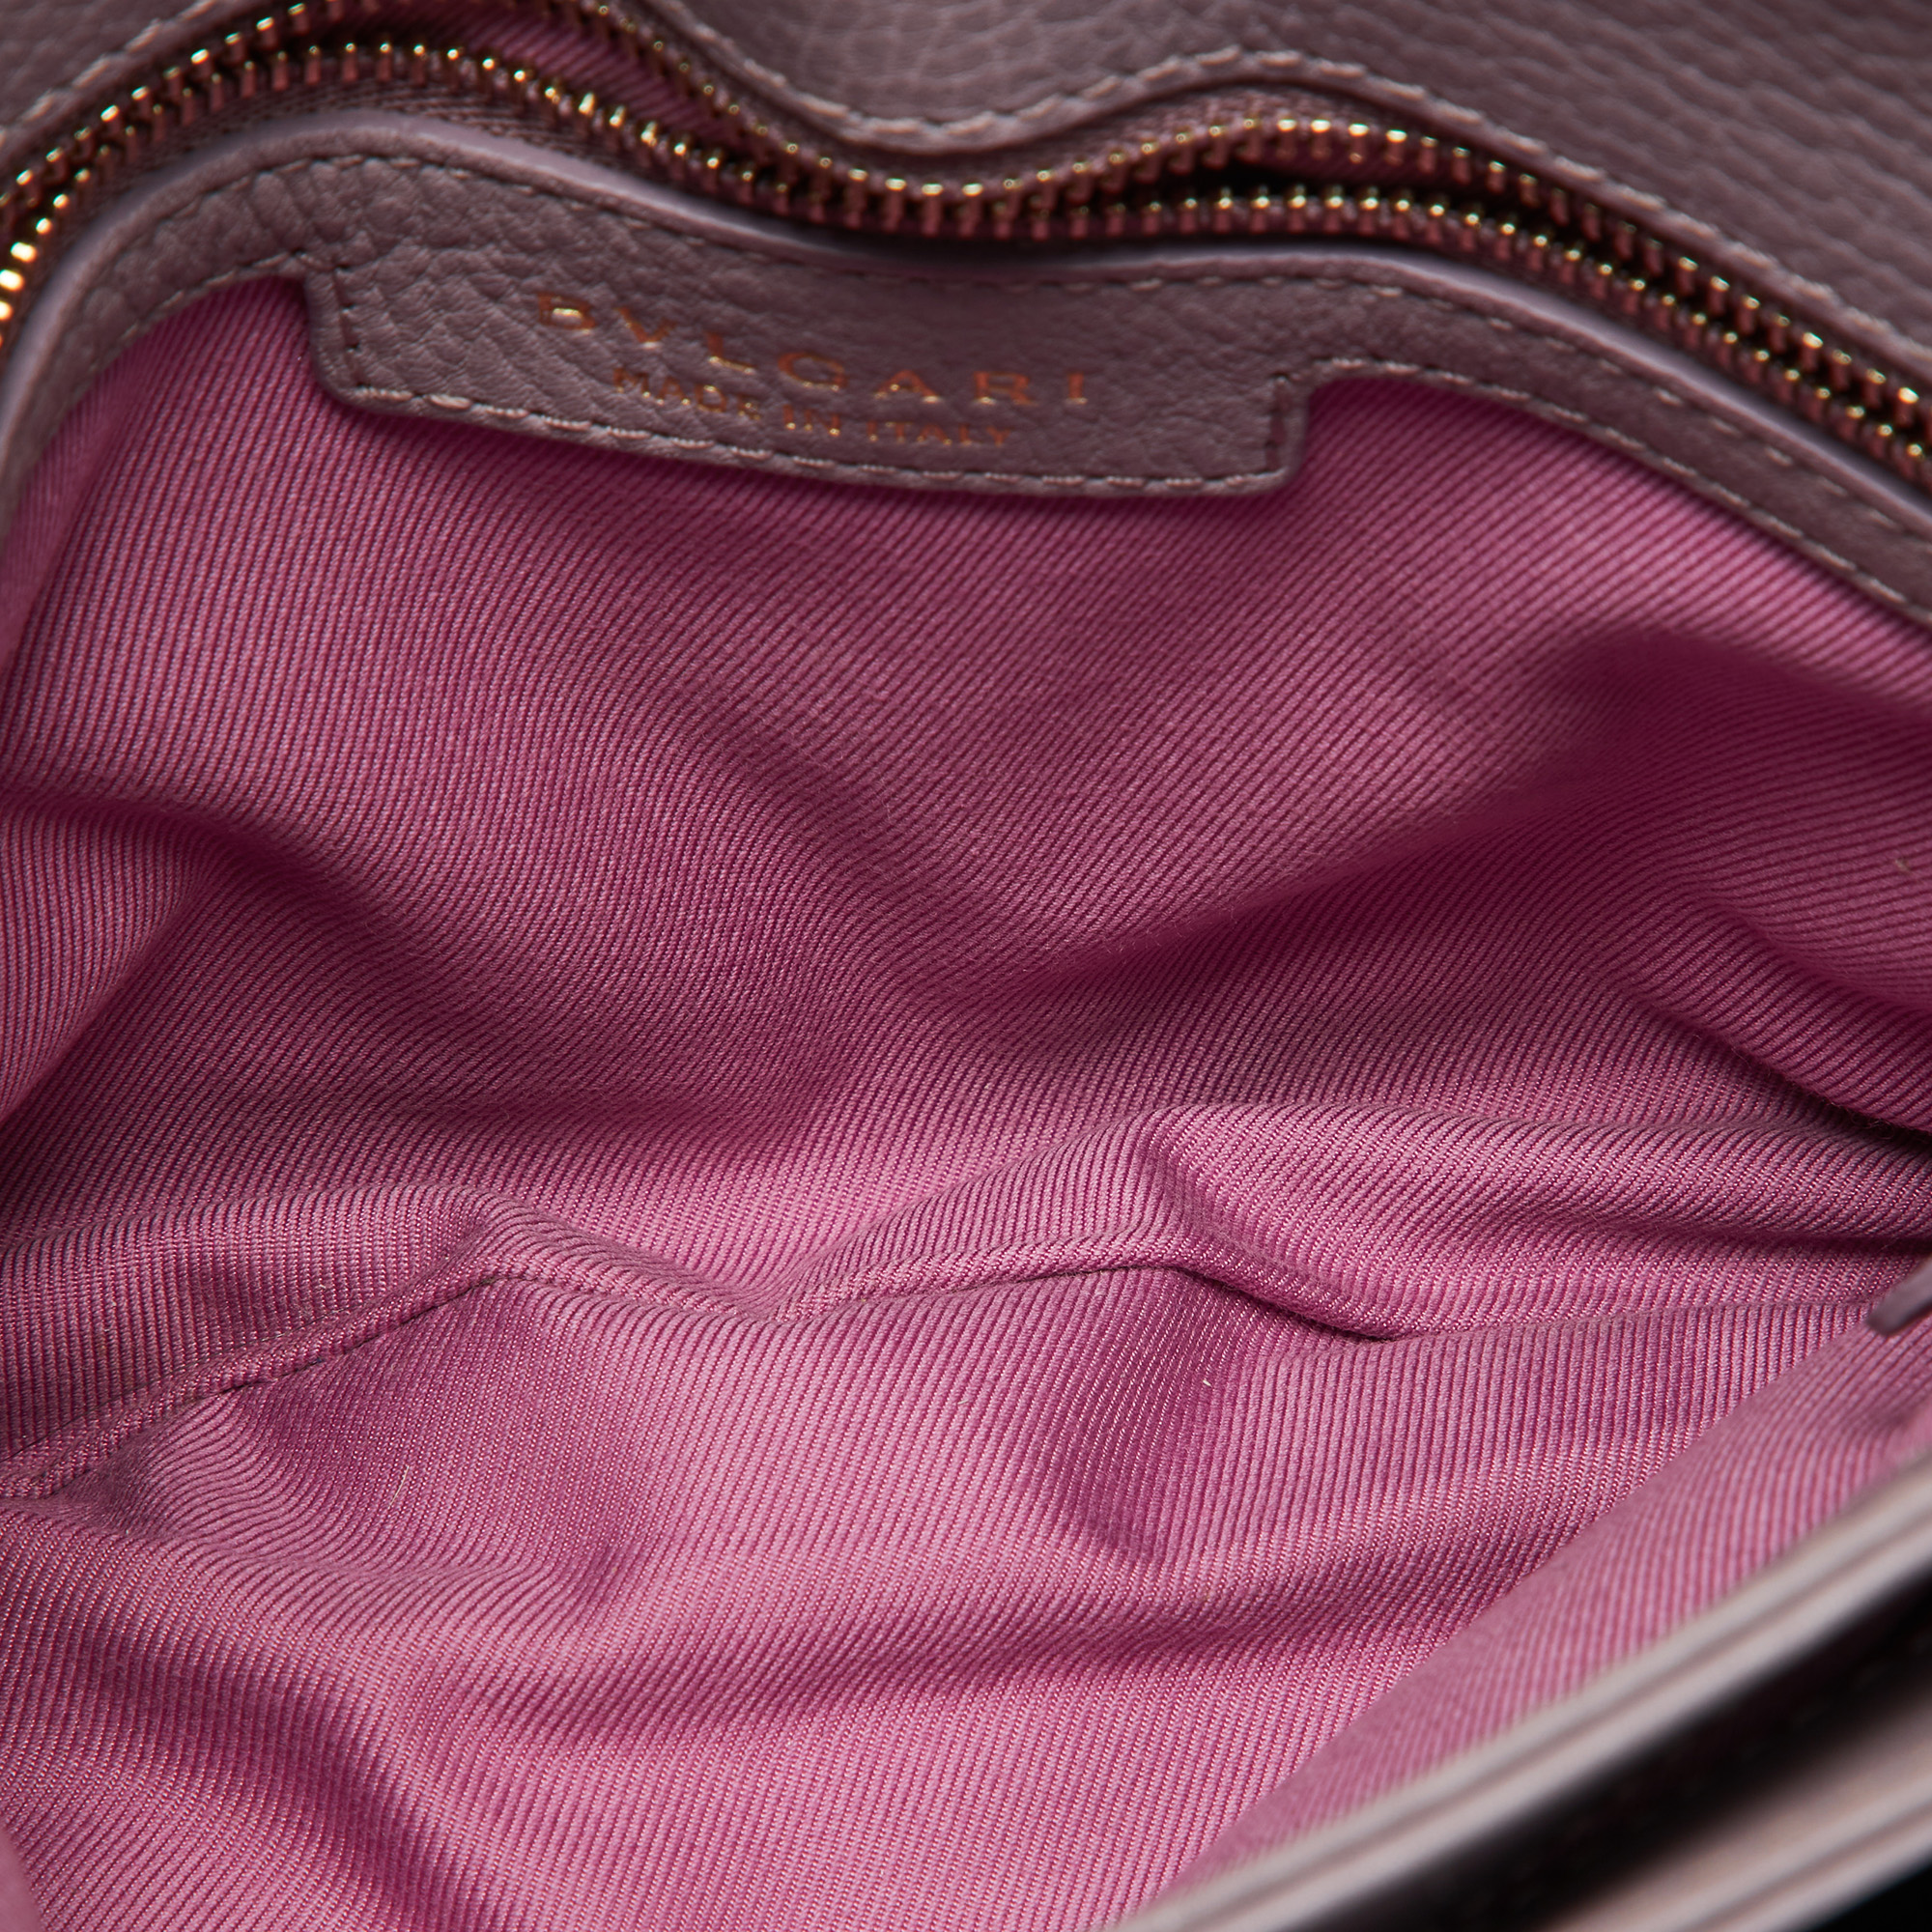 Bvlgari Purple Leather Flap Shoulder Bag